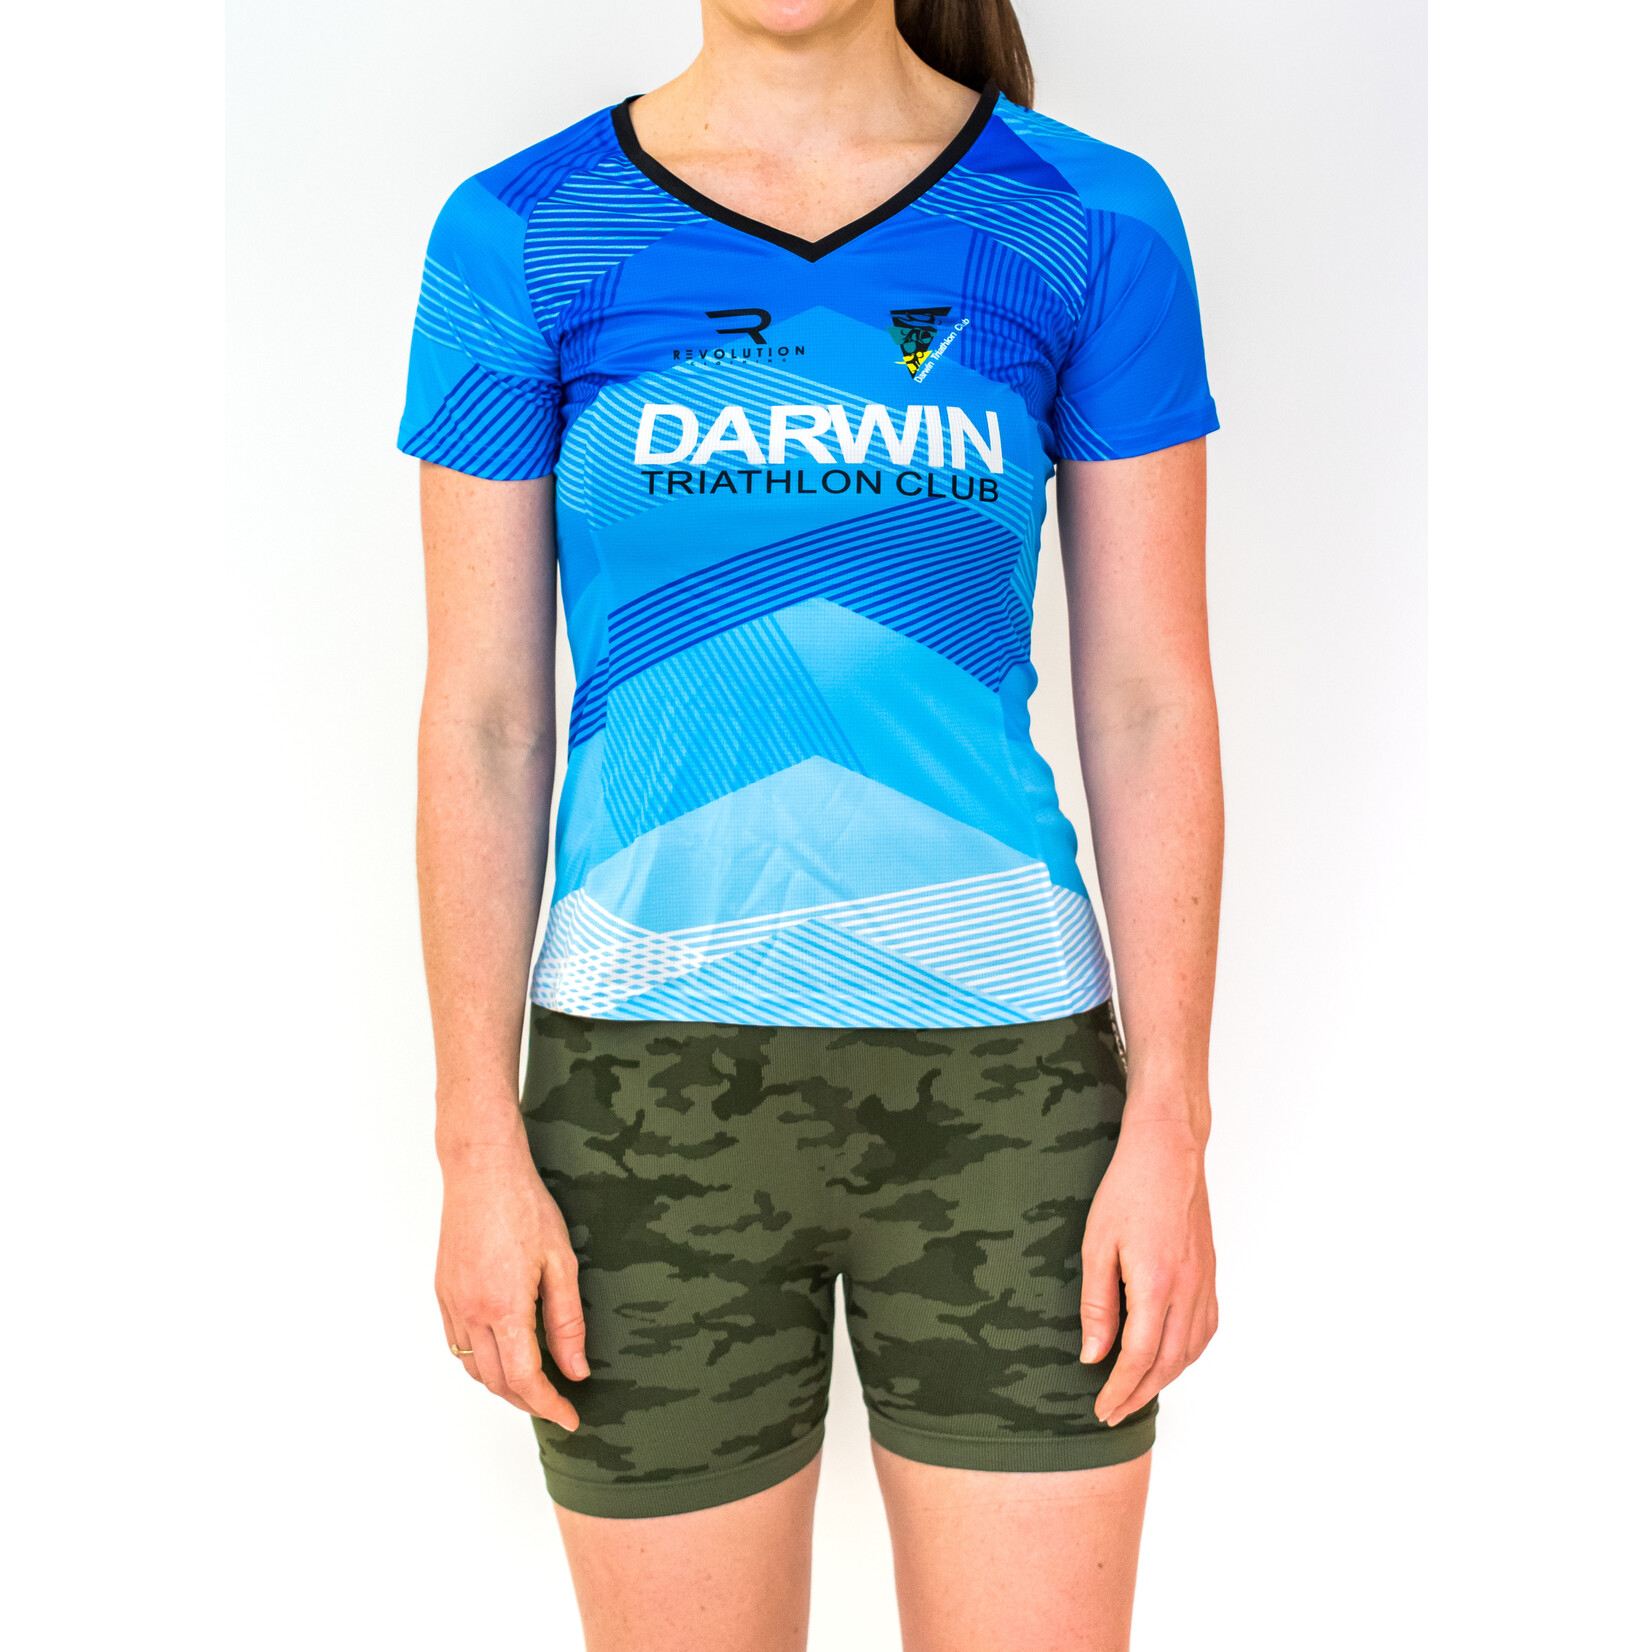 Revolution Clothing Womens Darwin Tri Club Running Shirt